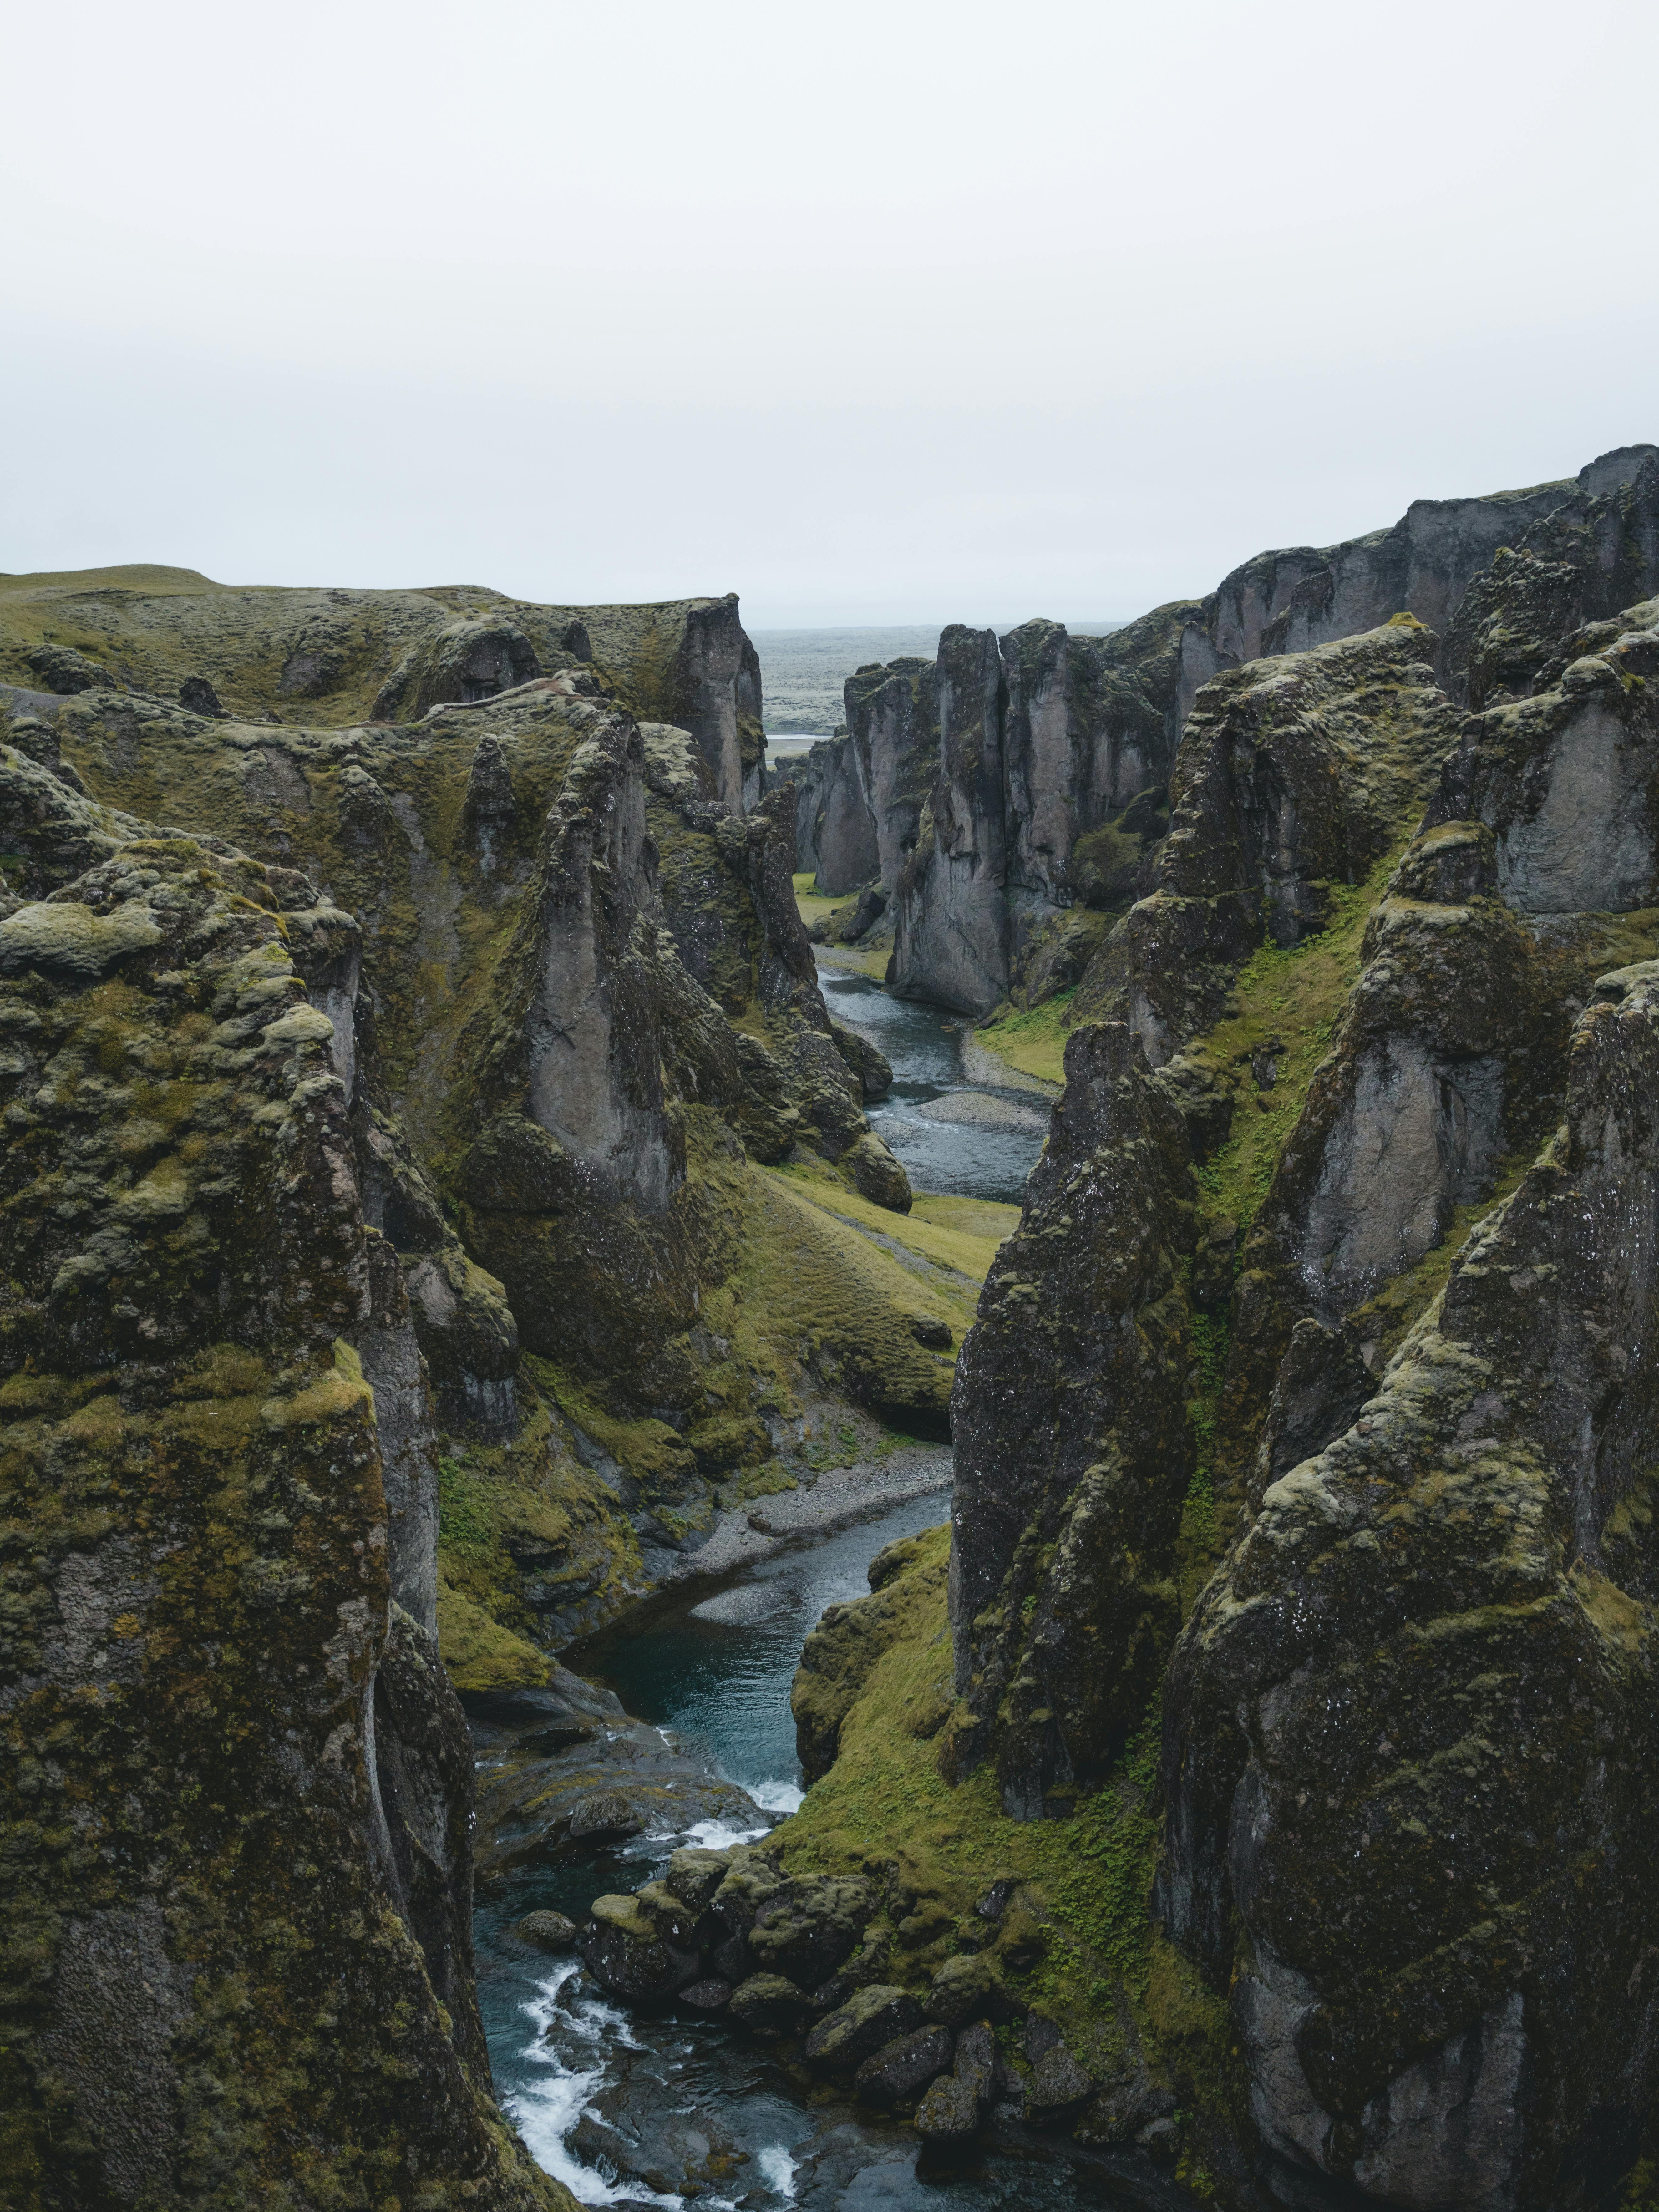 Exploring Iceland on a Budget: Money-Saving Travel Tips